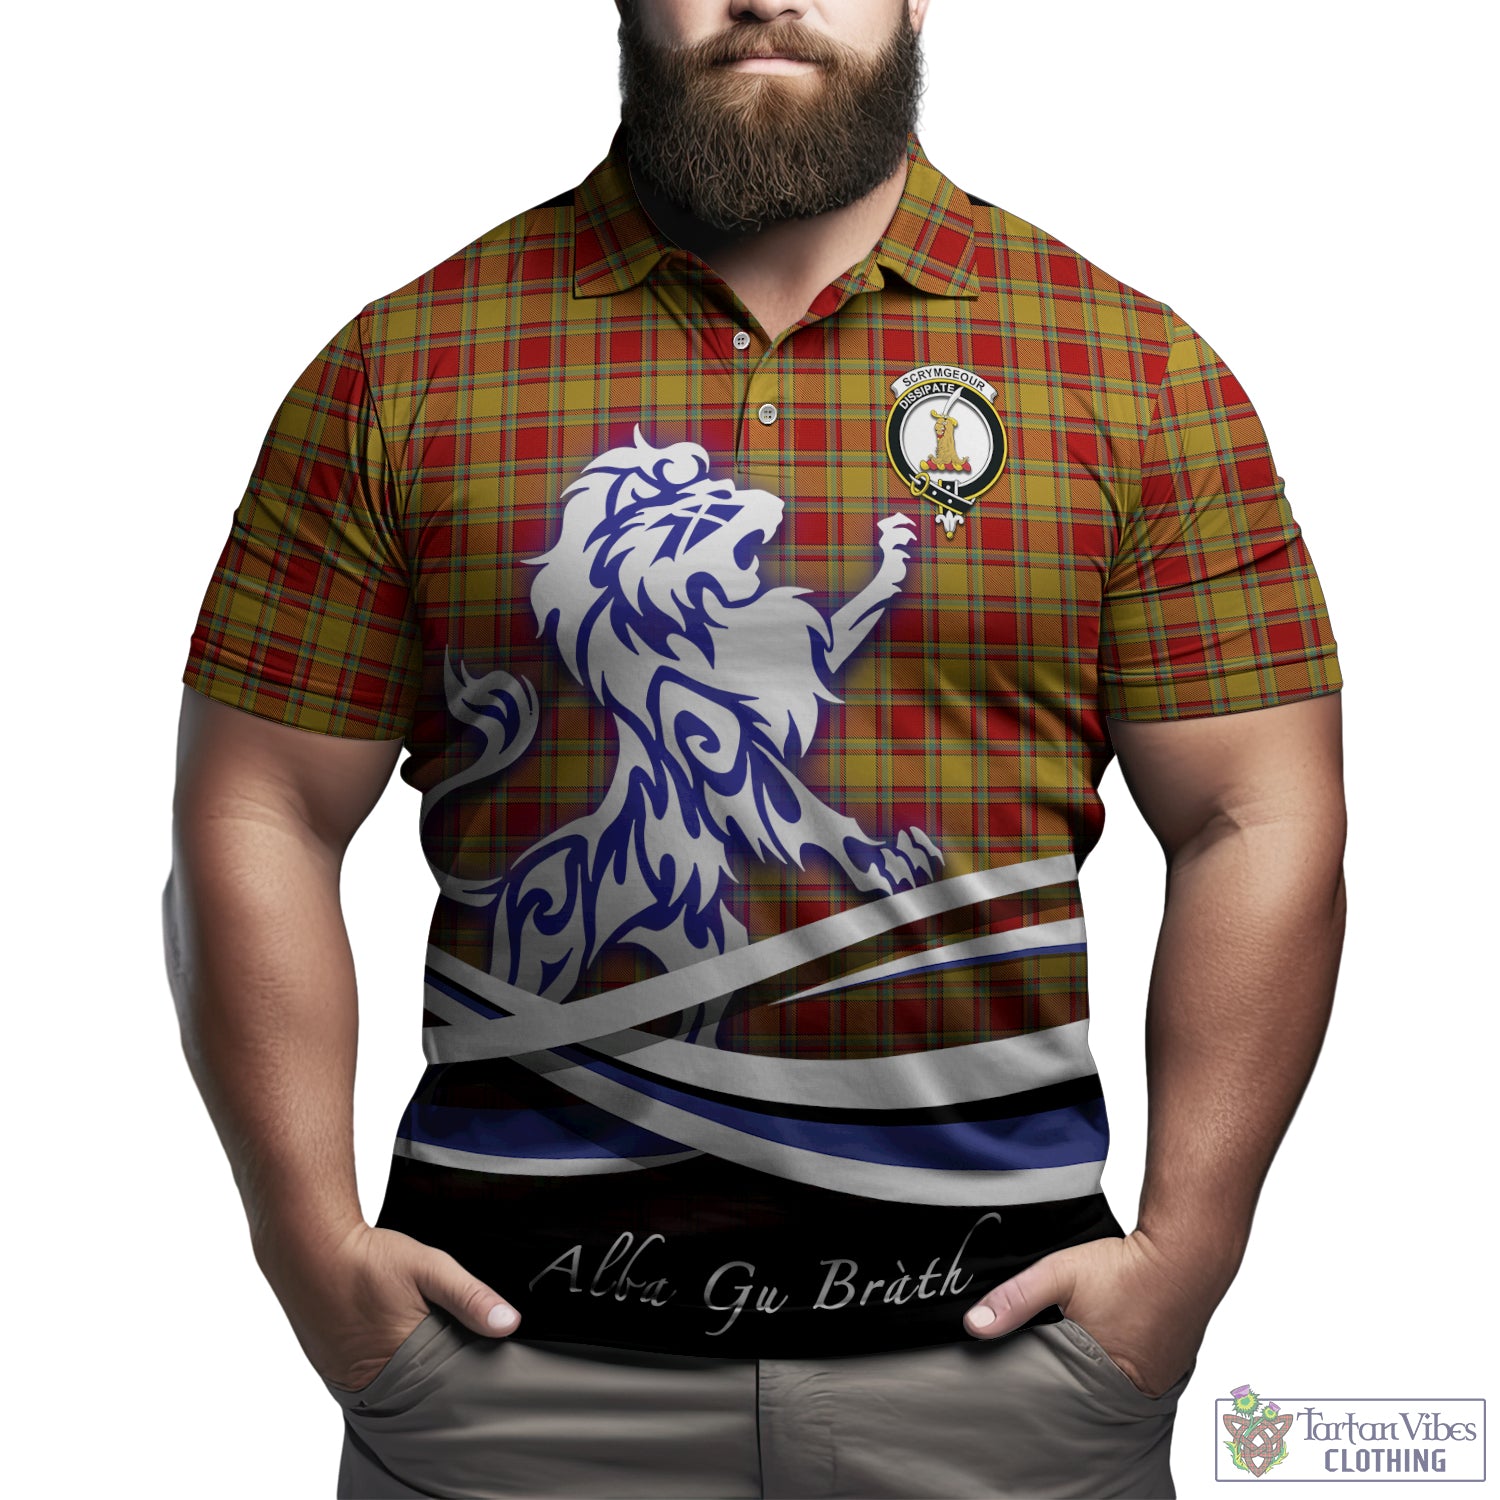 scrymgeour-tartan-polo-shirt-with-alba-gu-brath-regal-lion-emblem